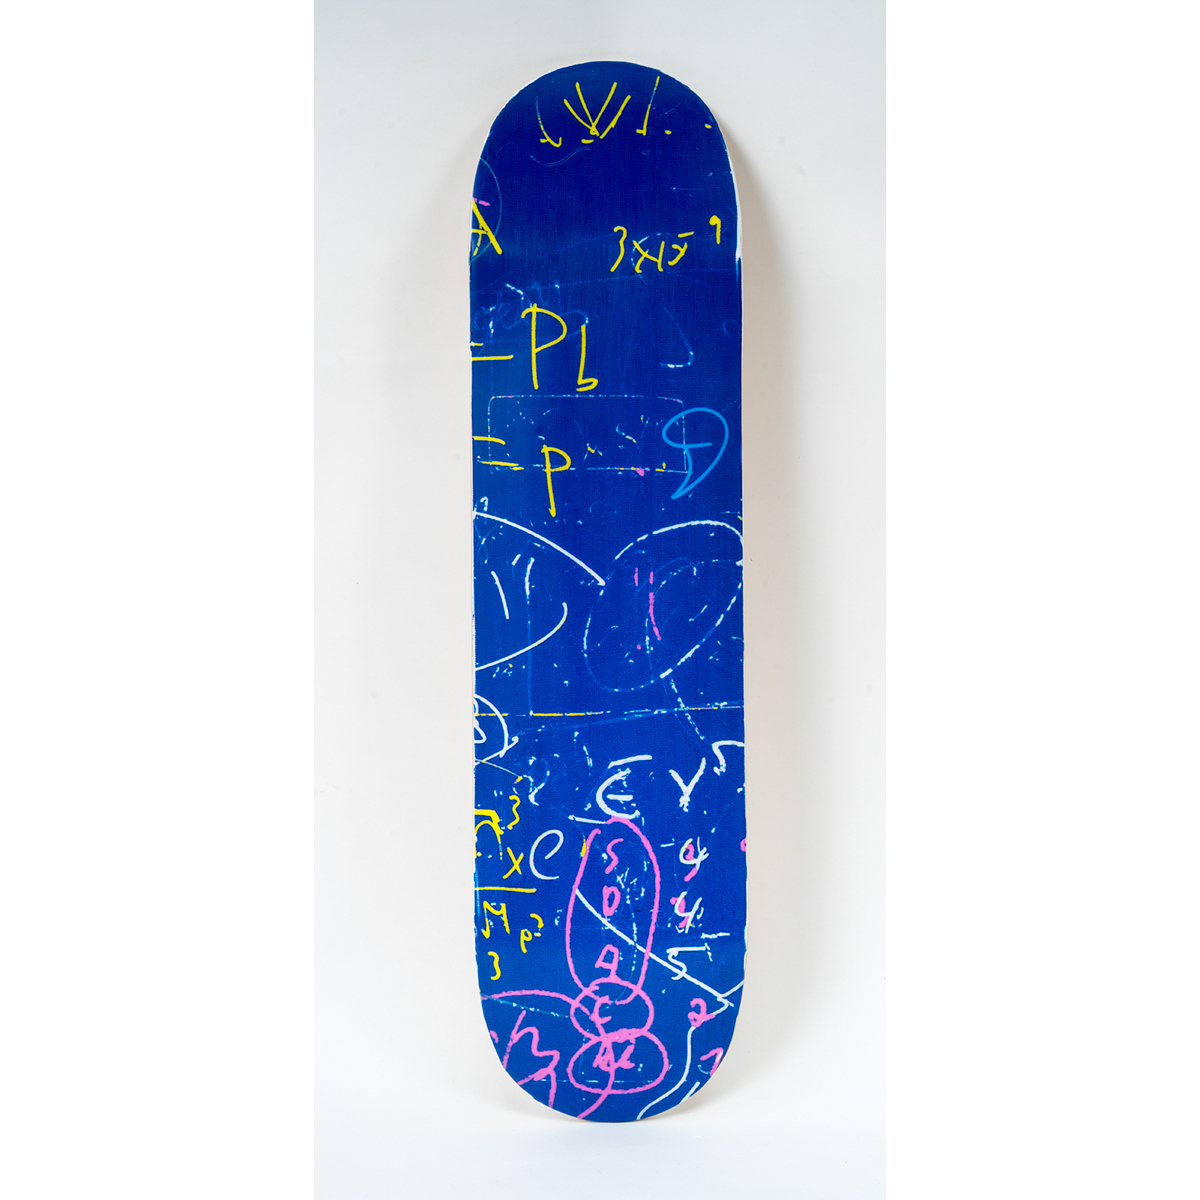 Wonder speer Sluier 025 Blue Galaxy Left Chalkboard, 2021. Unique Artist Skateboard by Steve  Miller. - Stevemiller Dot Art